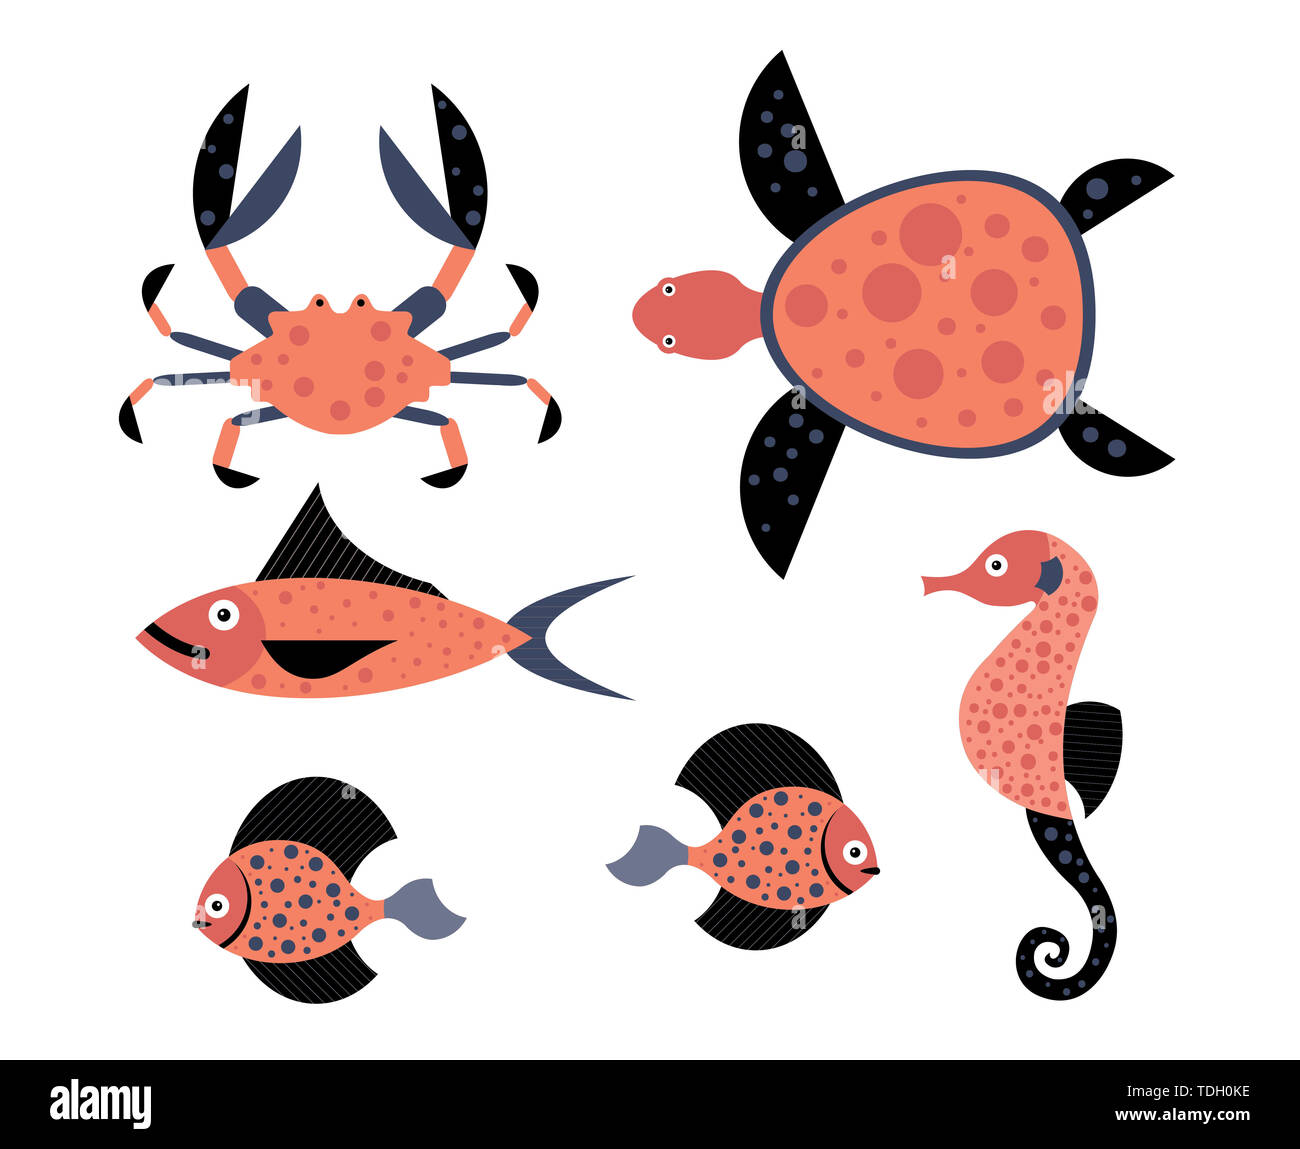 sea creature vector illustrations Stock Photo